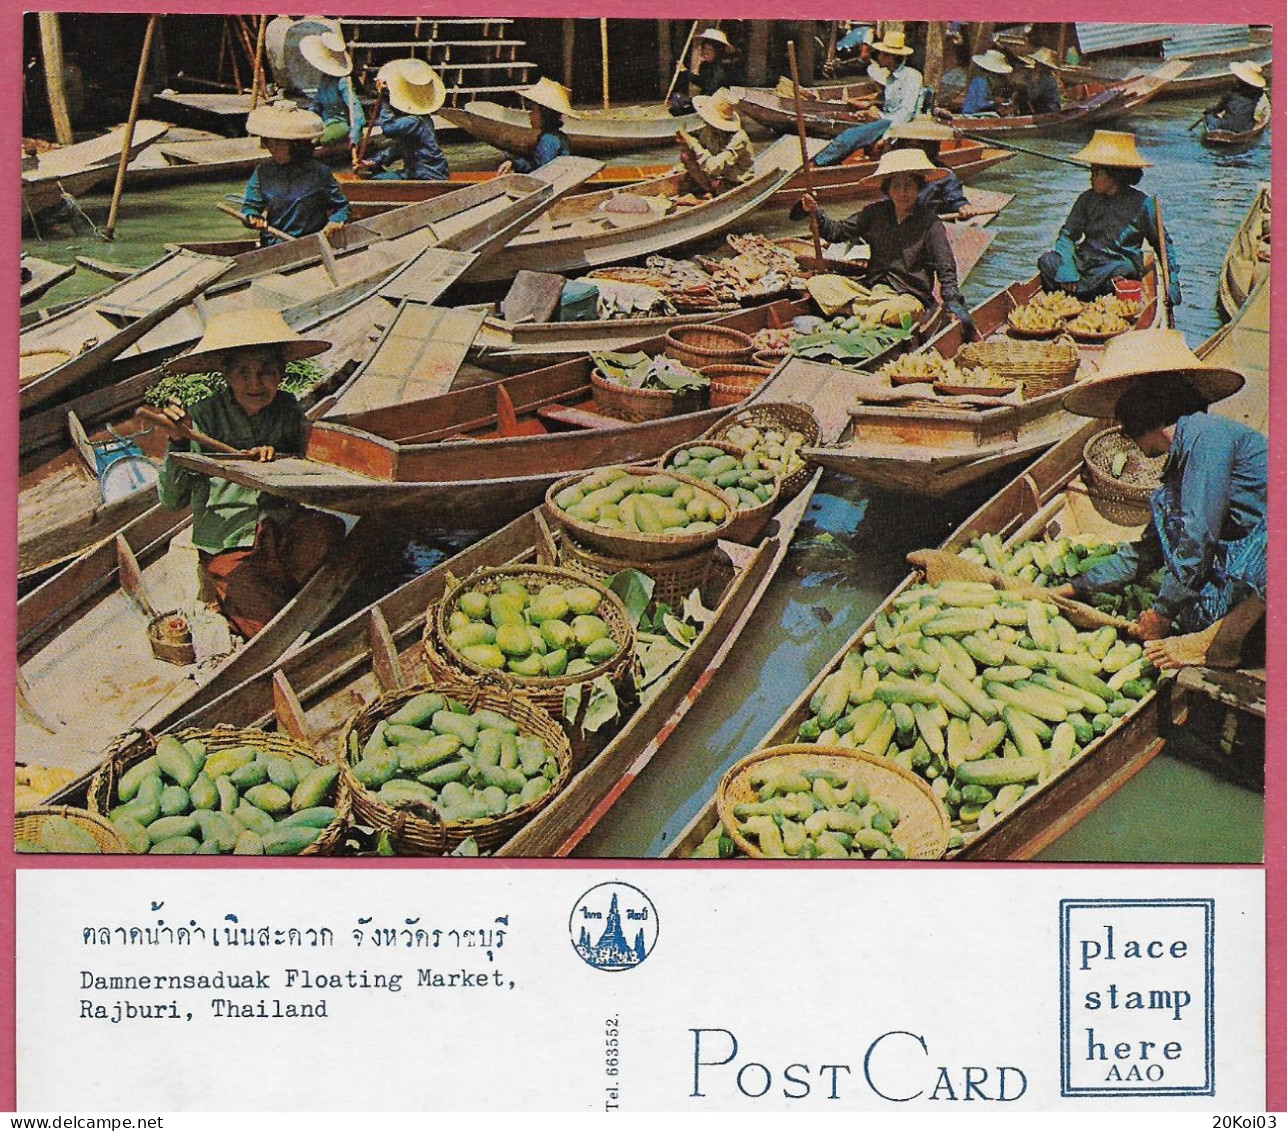 Thailand Damnernsaduak Floating Market Rajburi_Vintage 1975's_SUP_P.C.594 THAI SILPA_CPSM_cpc - Thaïland